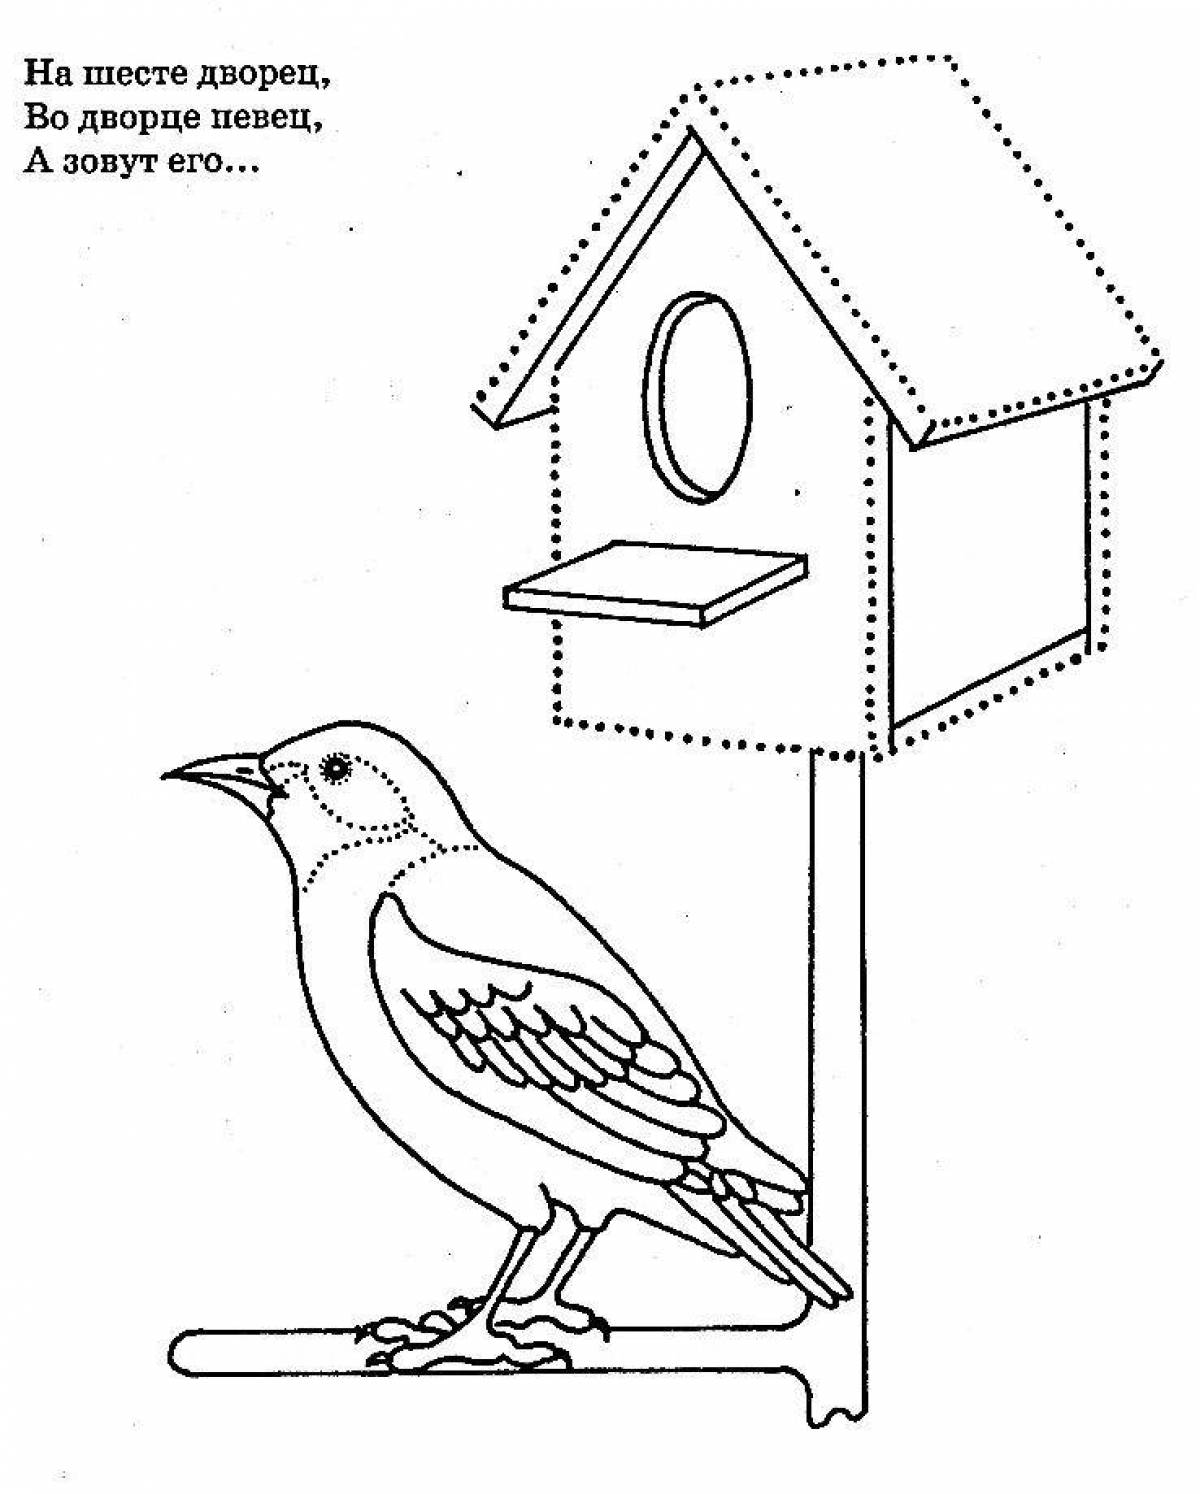 Bright birdhouse coloring page